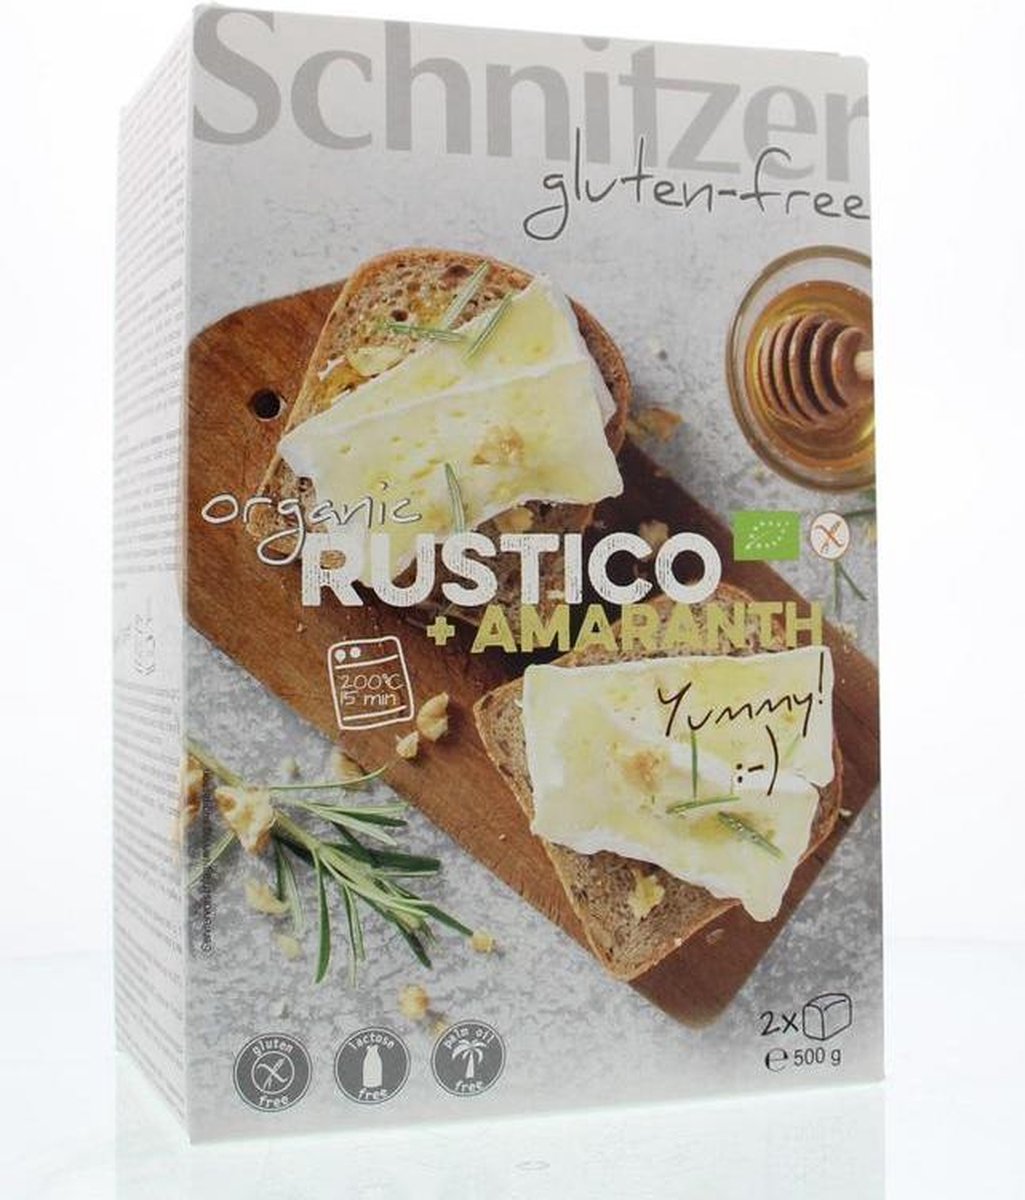 Schnitzer Rustico Amaranth, 500 G, 1 Units